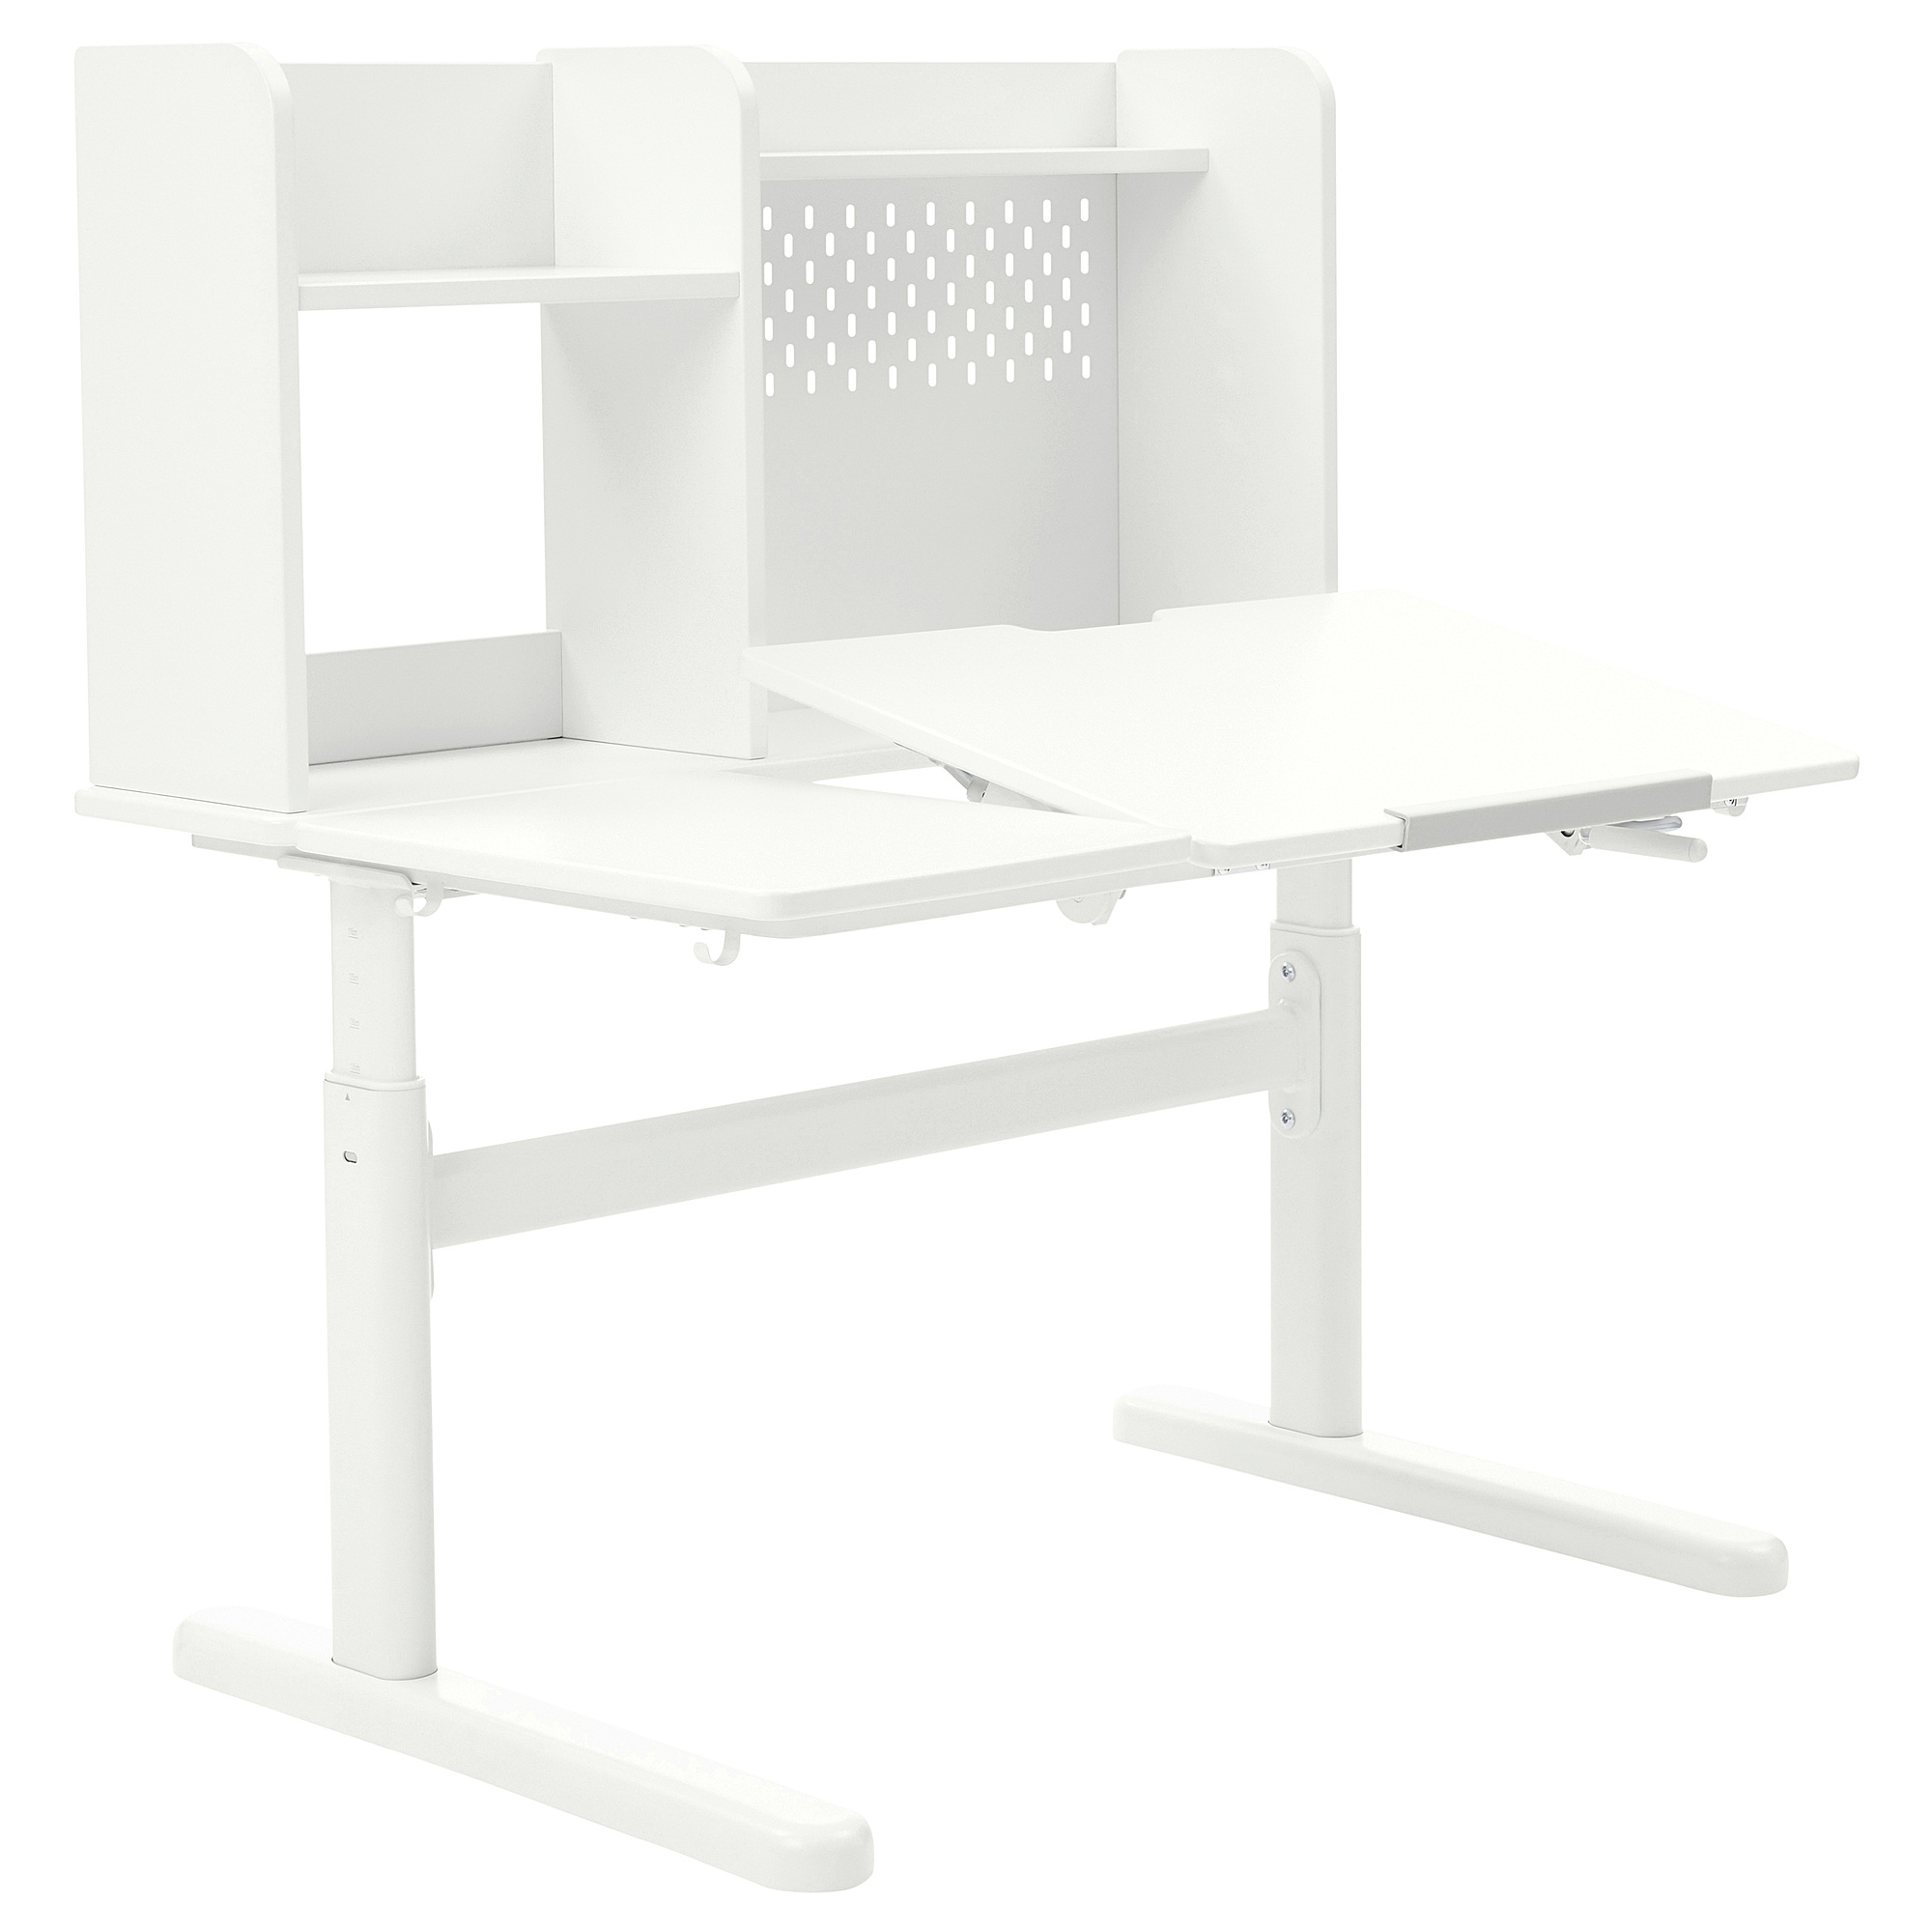 BERGLÄRKA desk top and shelf